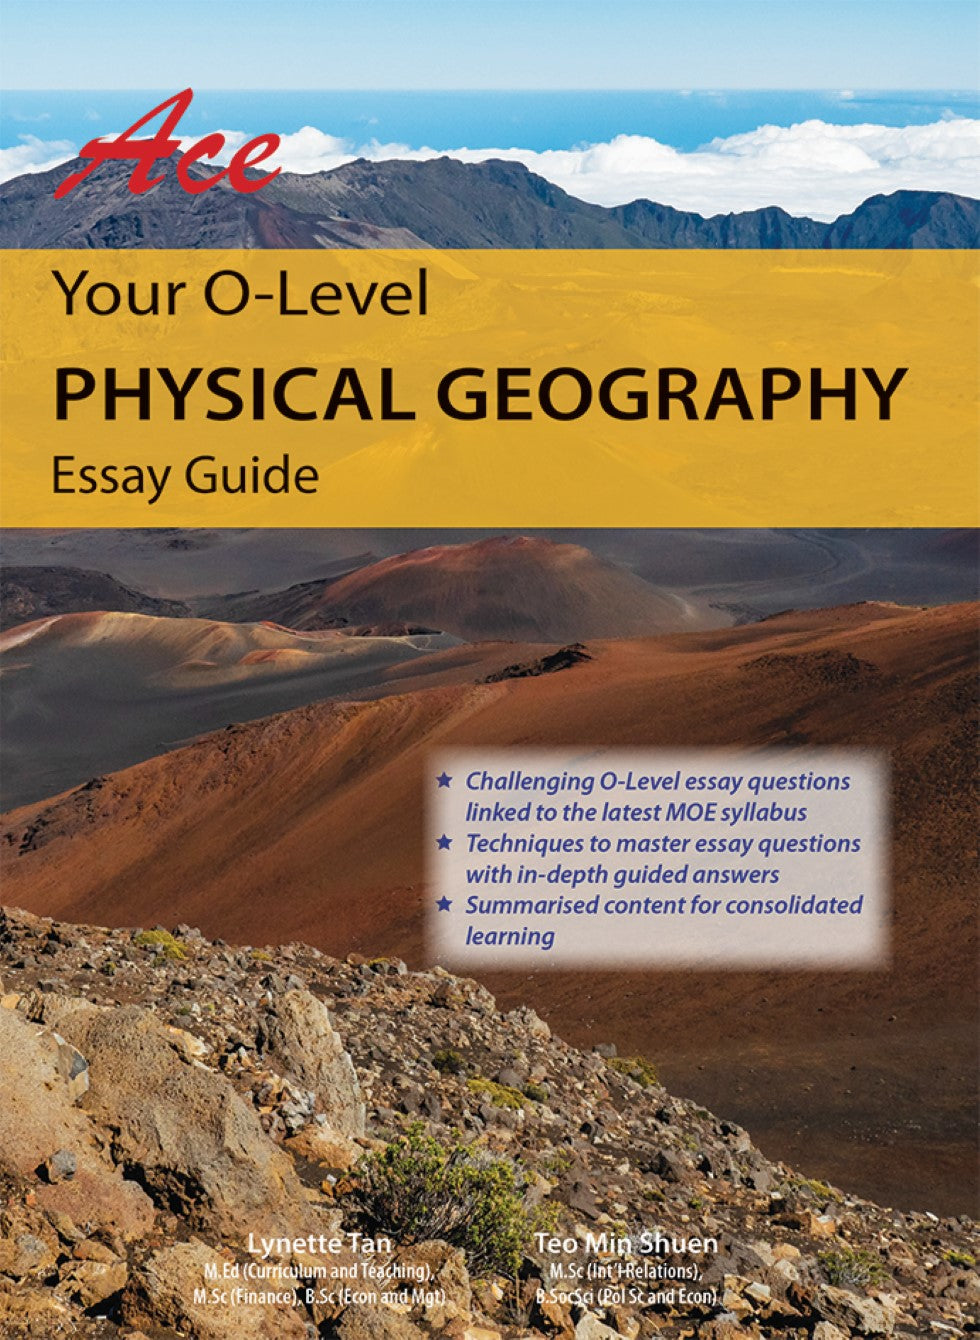 physical geography essay ideas